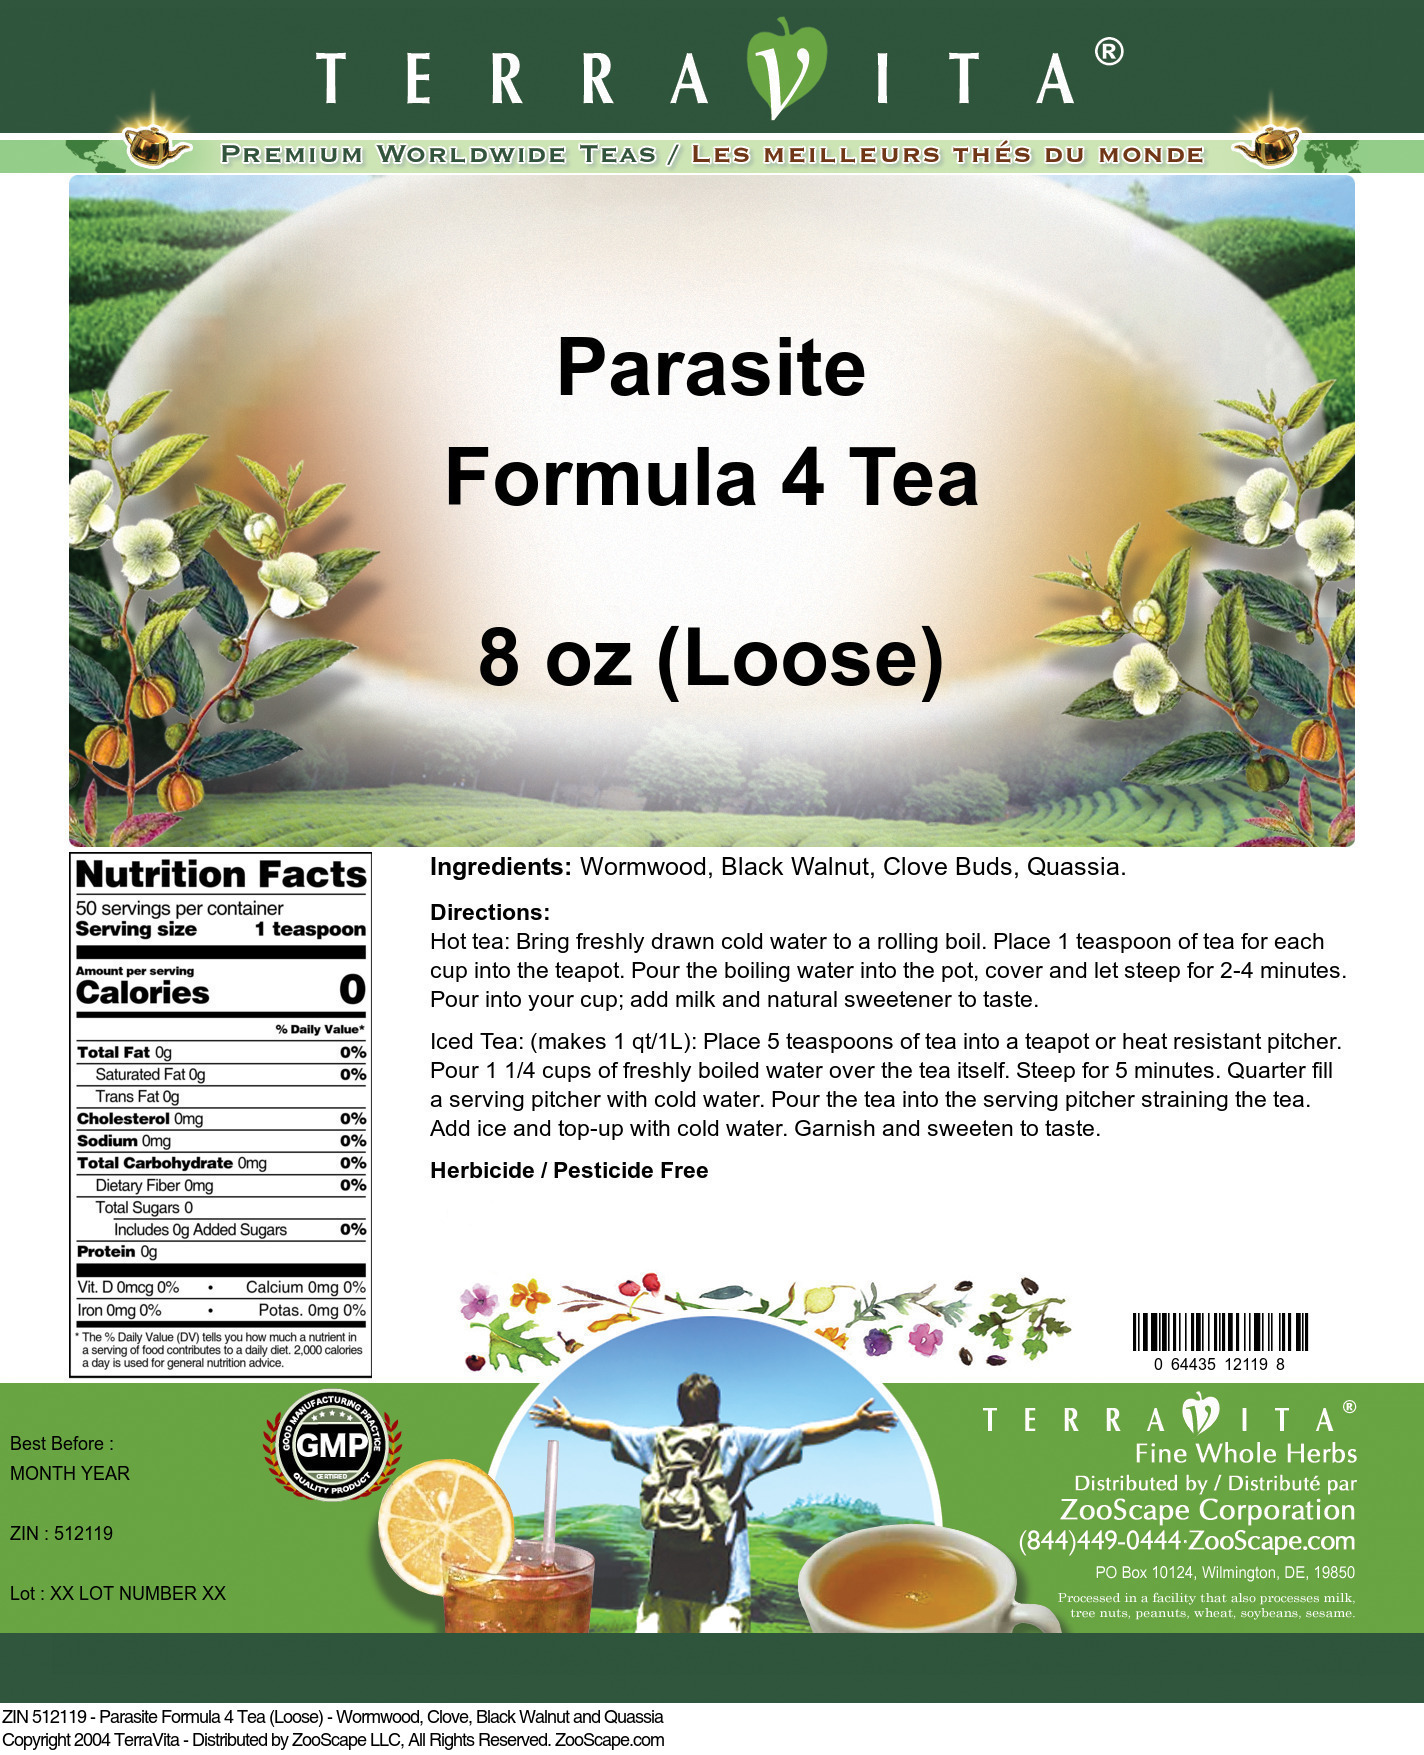 Parasite Formula 4 Tea (Loose) - Wormwood, Clove, Black Walnut and Quassia - Label